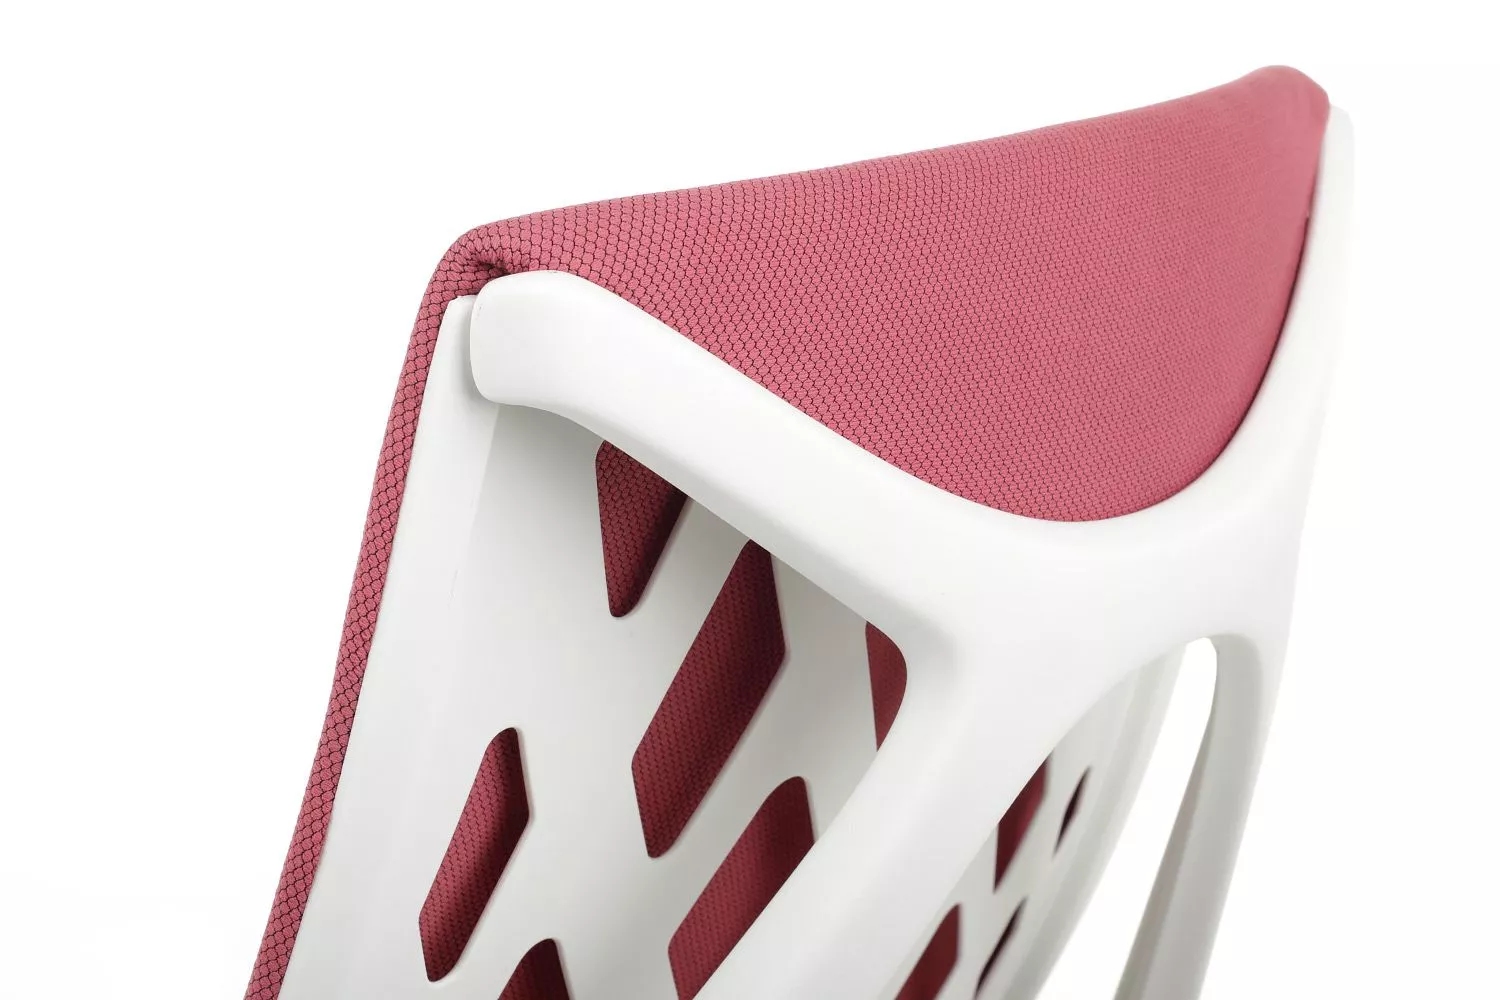 Кресло RIVA DESIGN Xpress CX1361М розовый / белый каркас